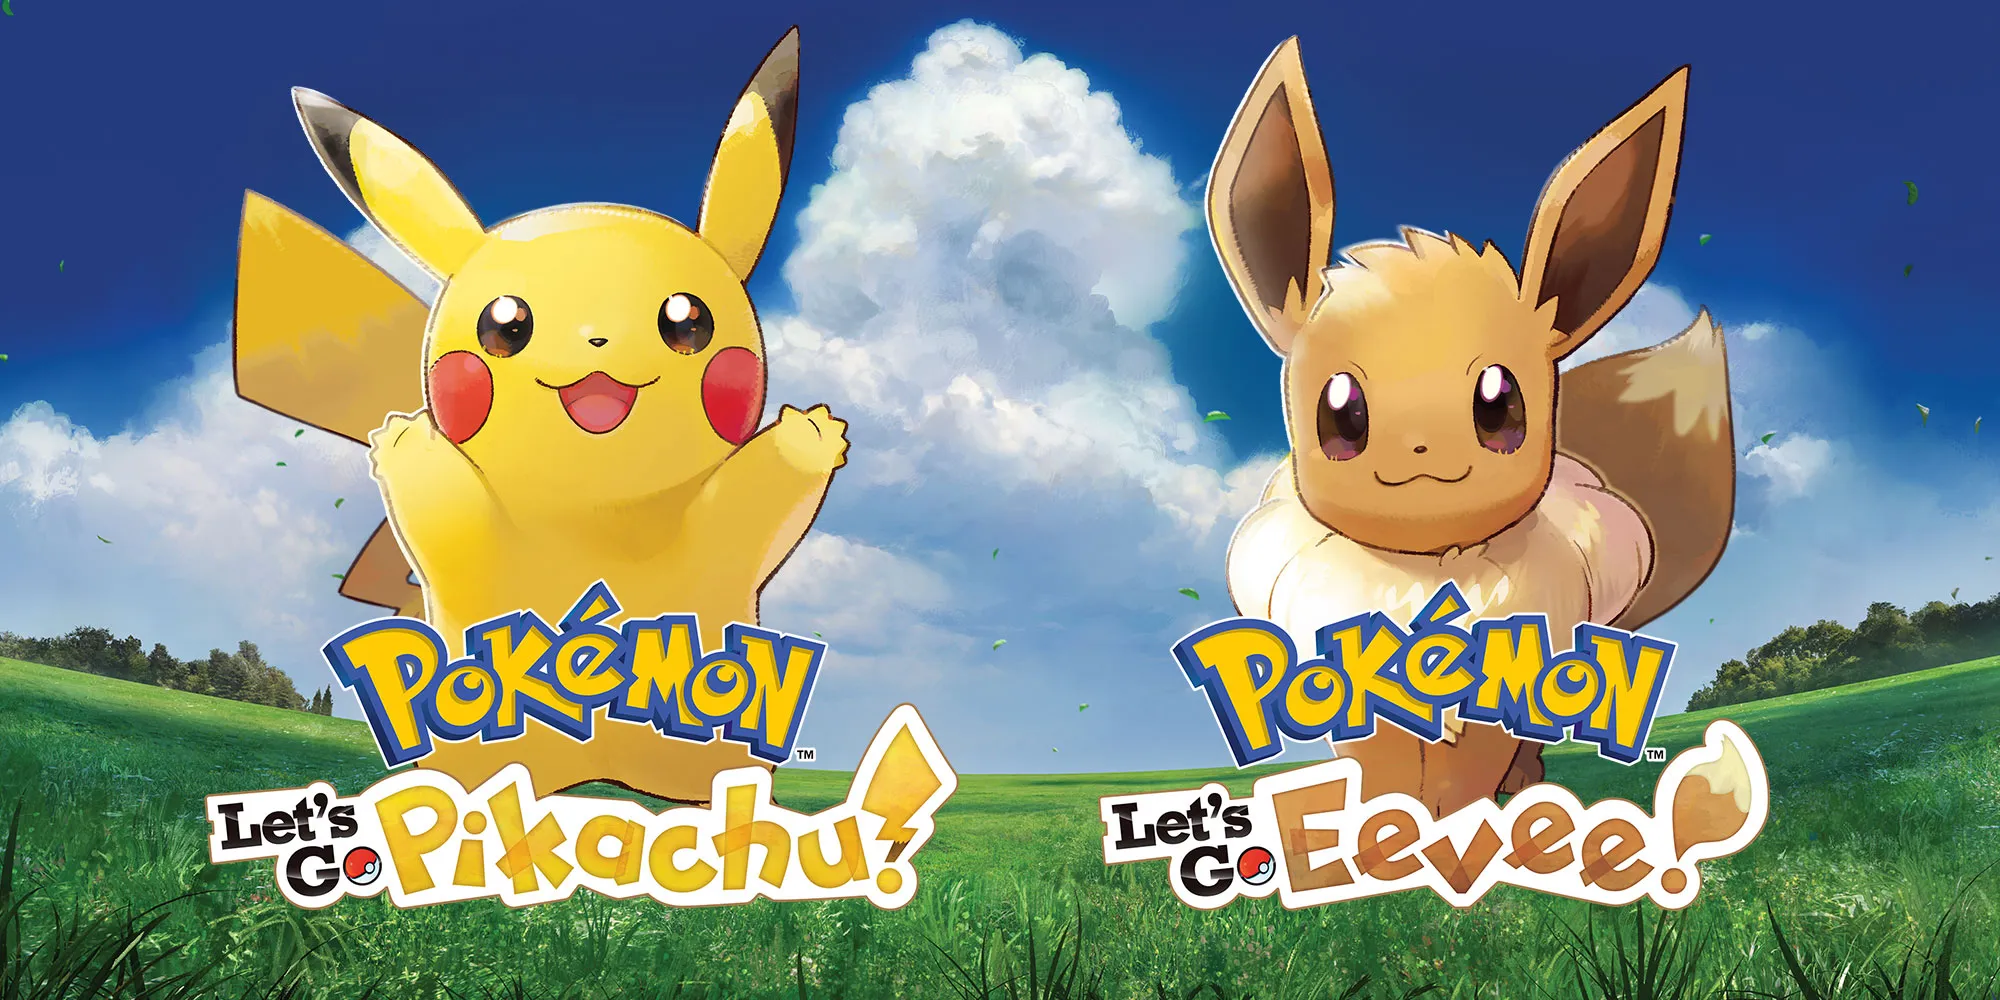 Pokemon Let’s Go Pikachu & Let’s Go Eevee